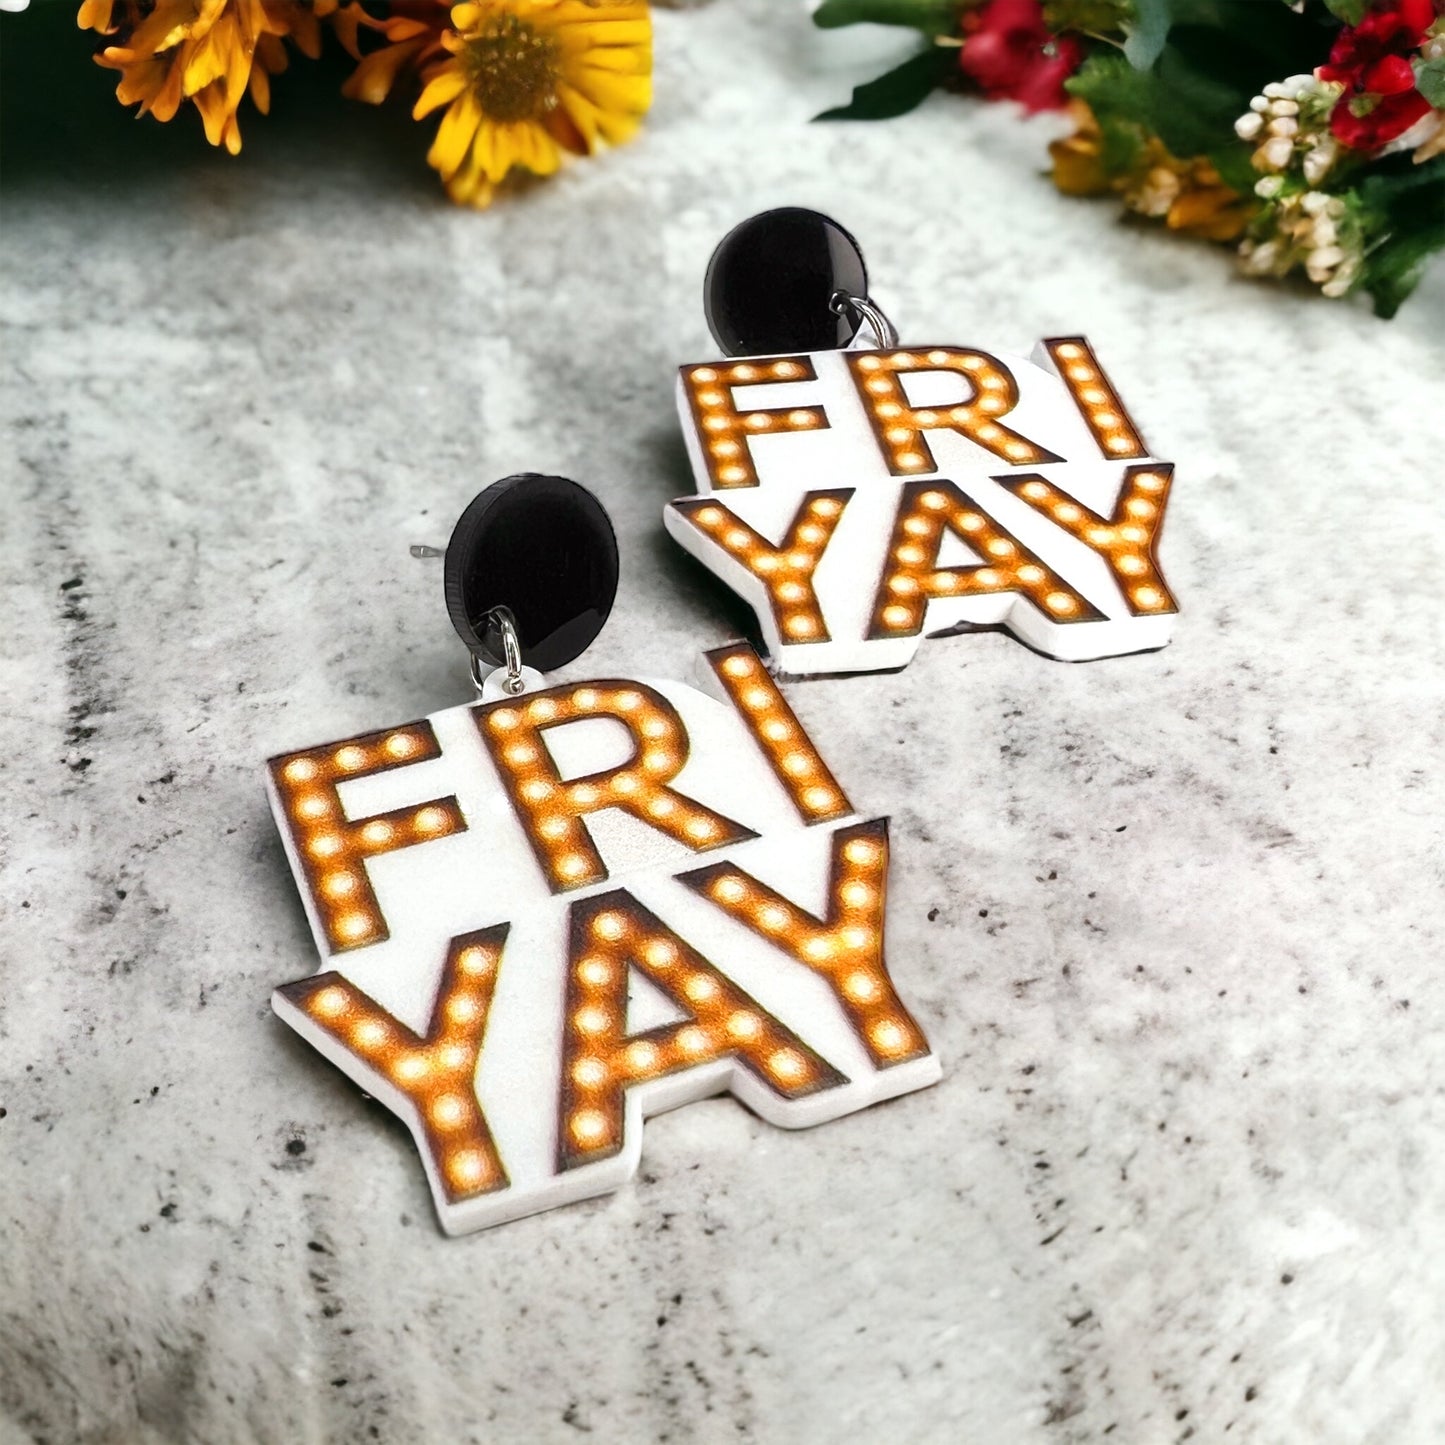 Friyay Earrings - Friday Earrings, Friday Accessories, Sassy Earrings, Fun Earrings, Sweet and Sassy